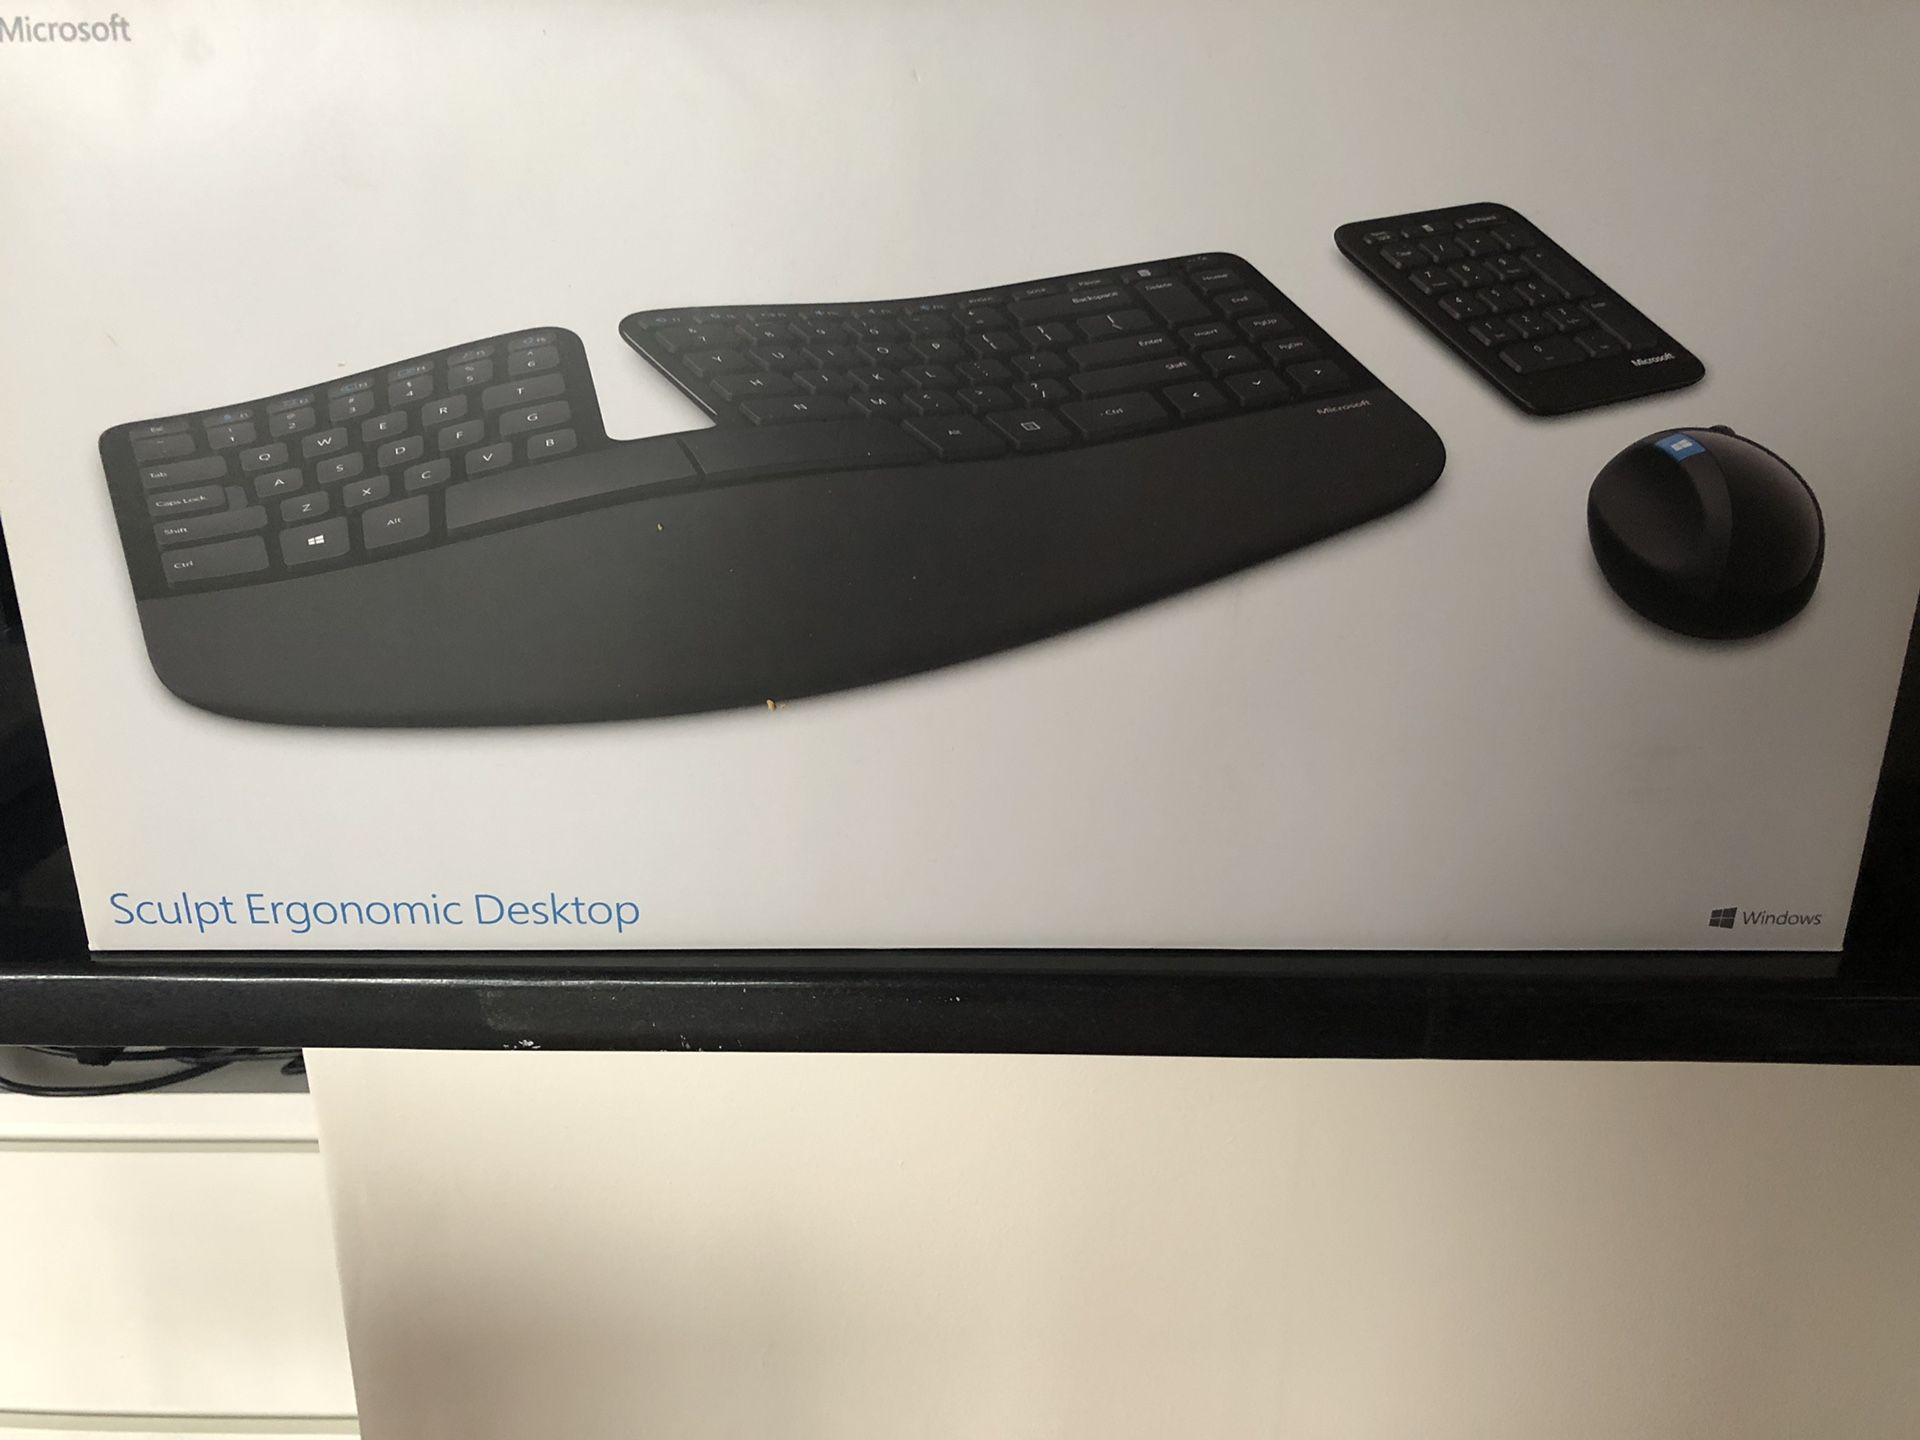 Brand new Microsoft sculpt ergonomic desktop wireless keyboard and mouse combo